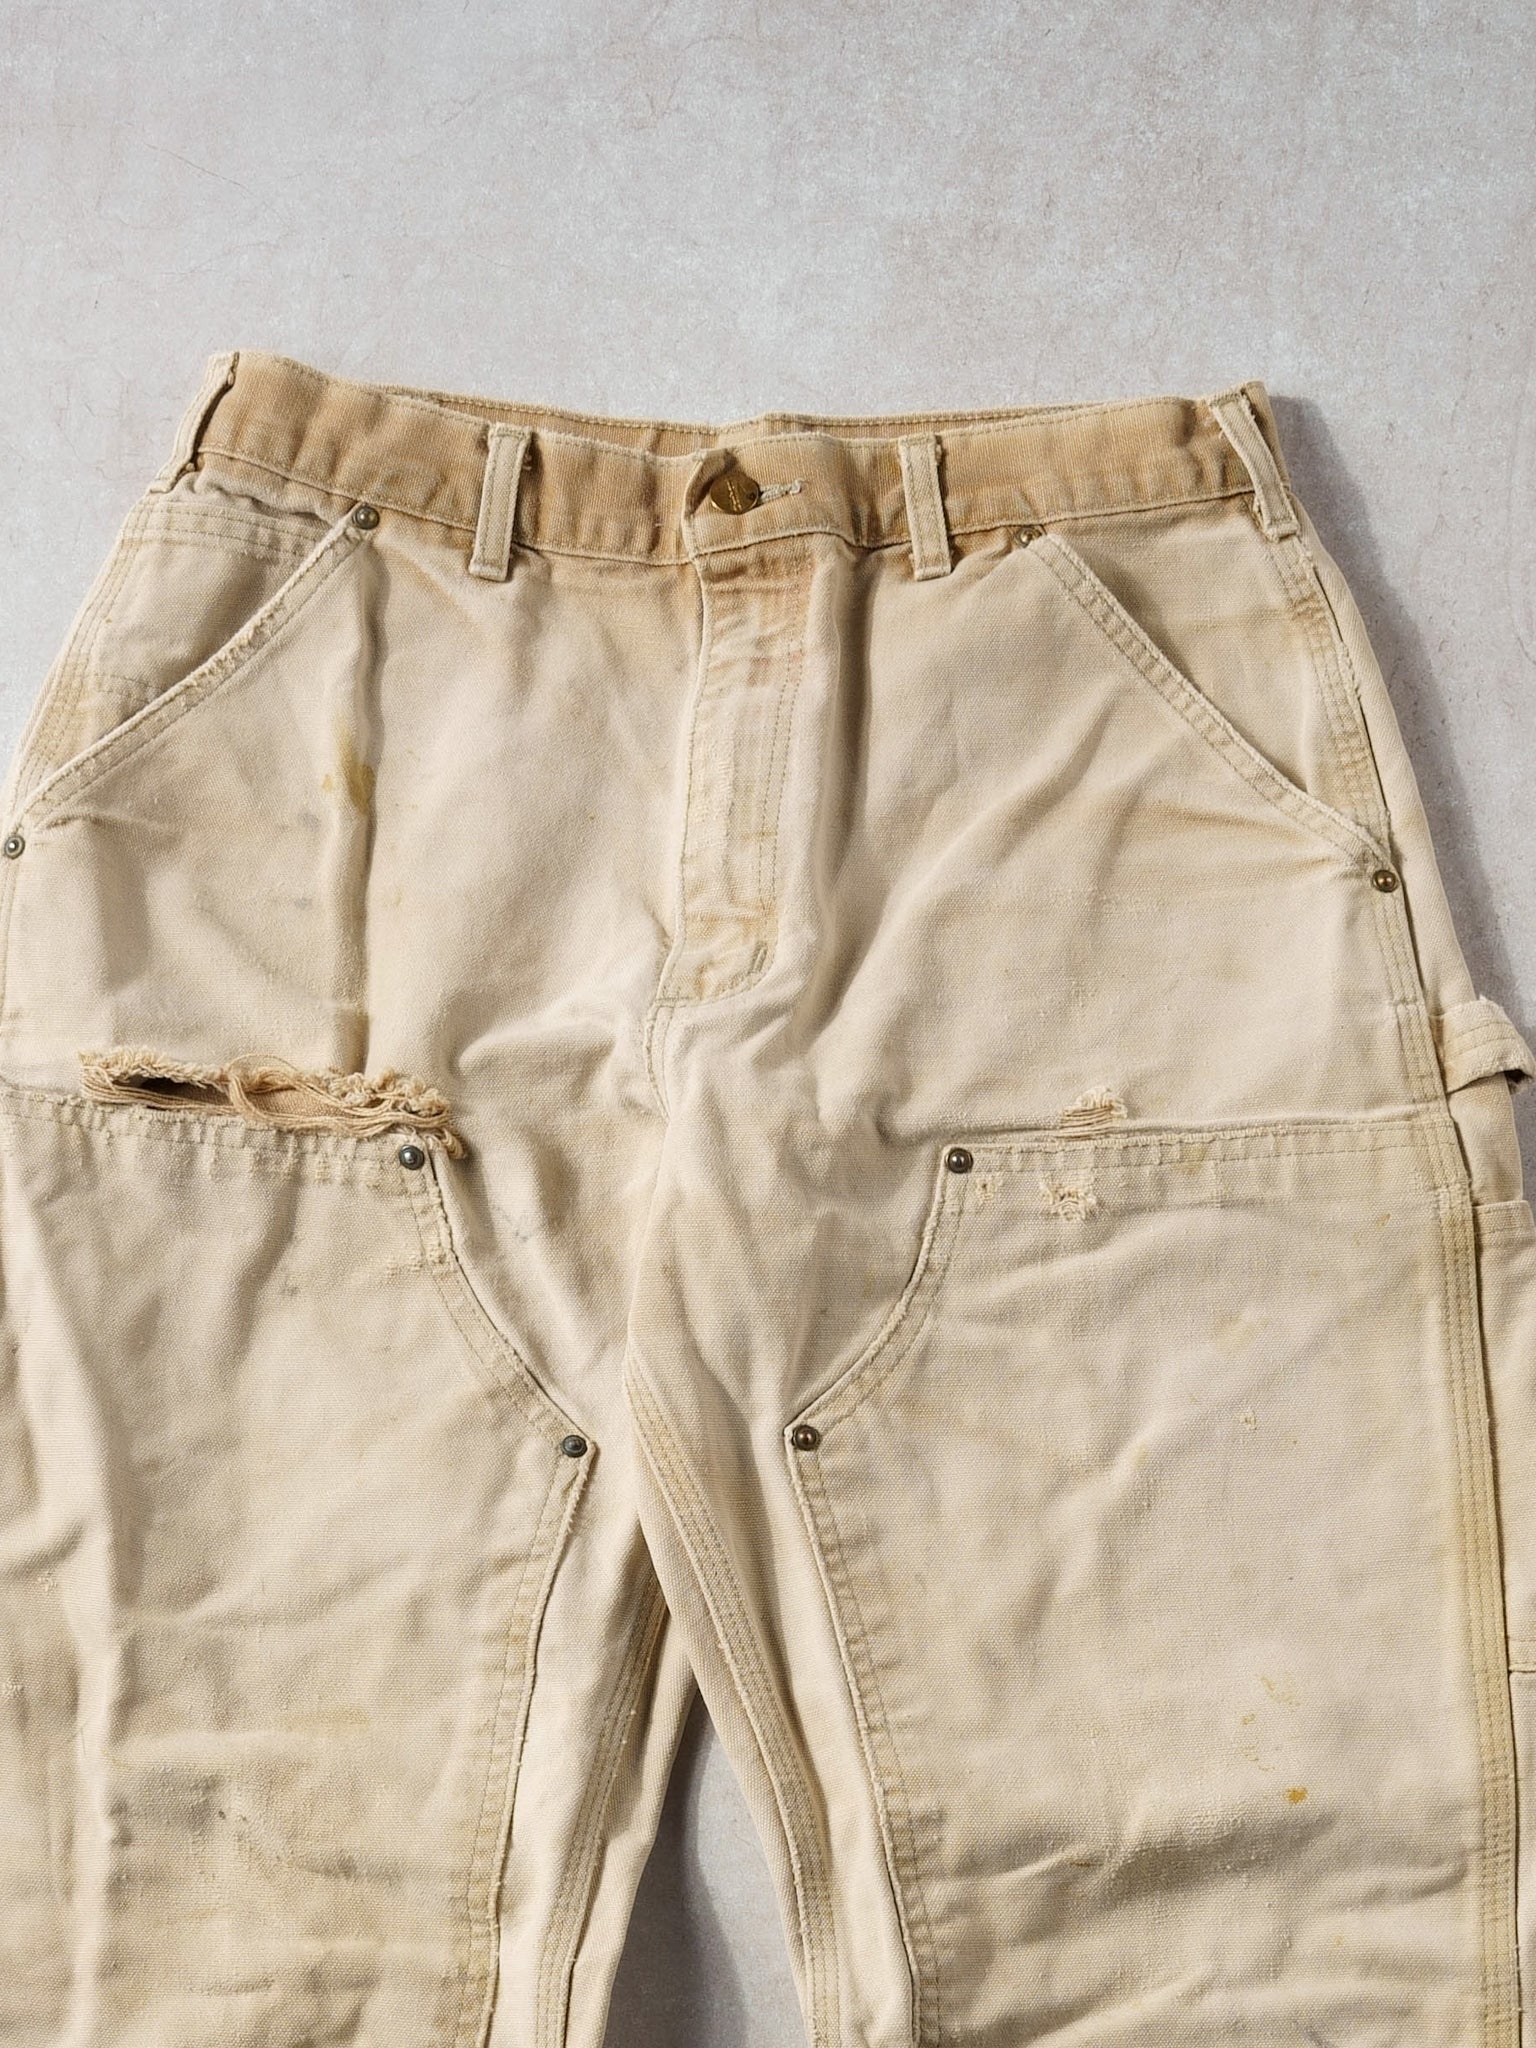 Vintage 90s Washed Khaki Carhartt Double Knee Carpenter Pants (32x31)